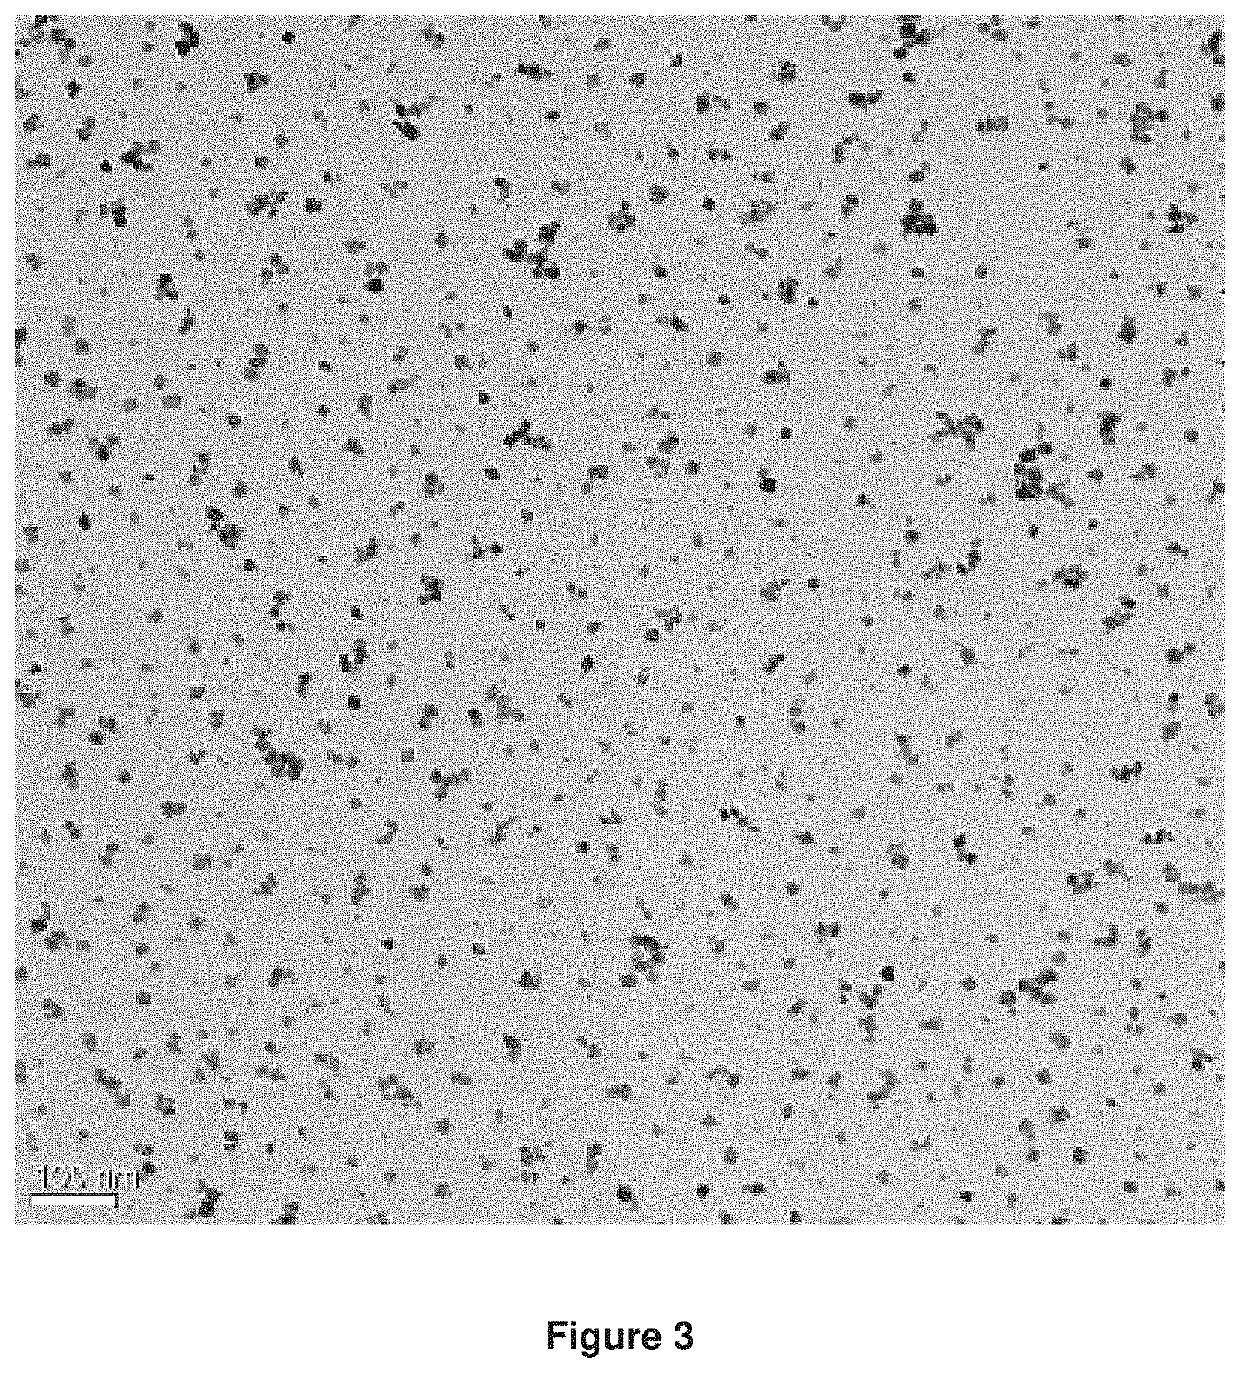 Zirconia dispersion for use in forming nano ceramics